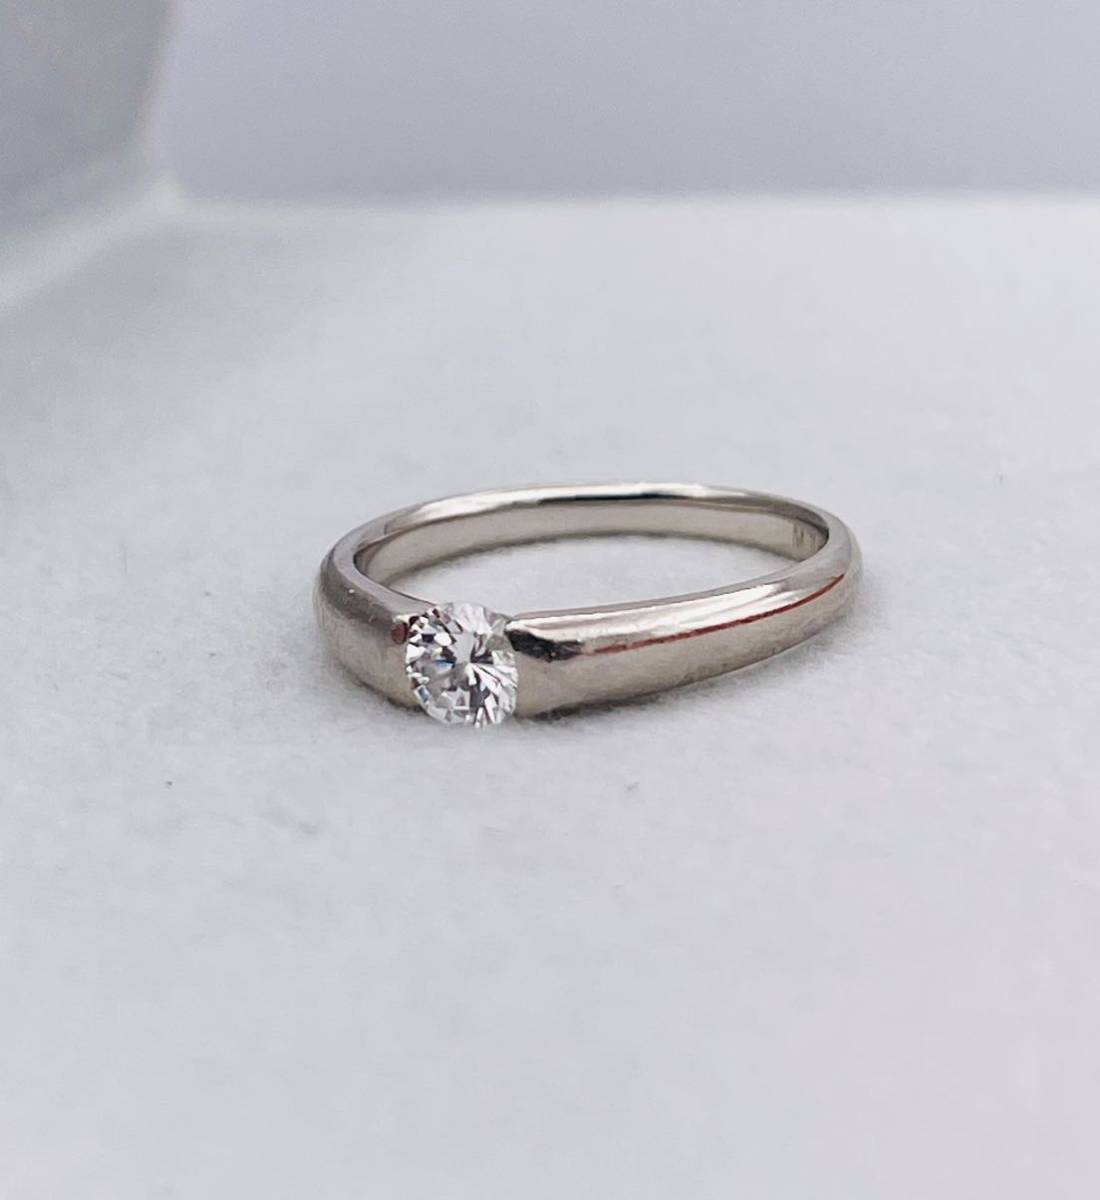 0.301ct pt900 プラチナ ダイヤモンド リング 指輪 アクセサリー 結婚指輪 内側刻印あり鑑別書付き サイズ11号 重量約4.09g_画像4